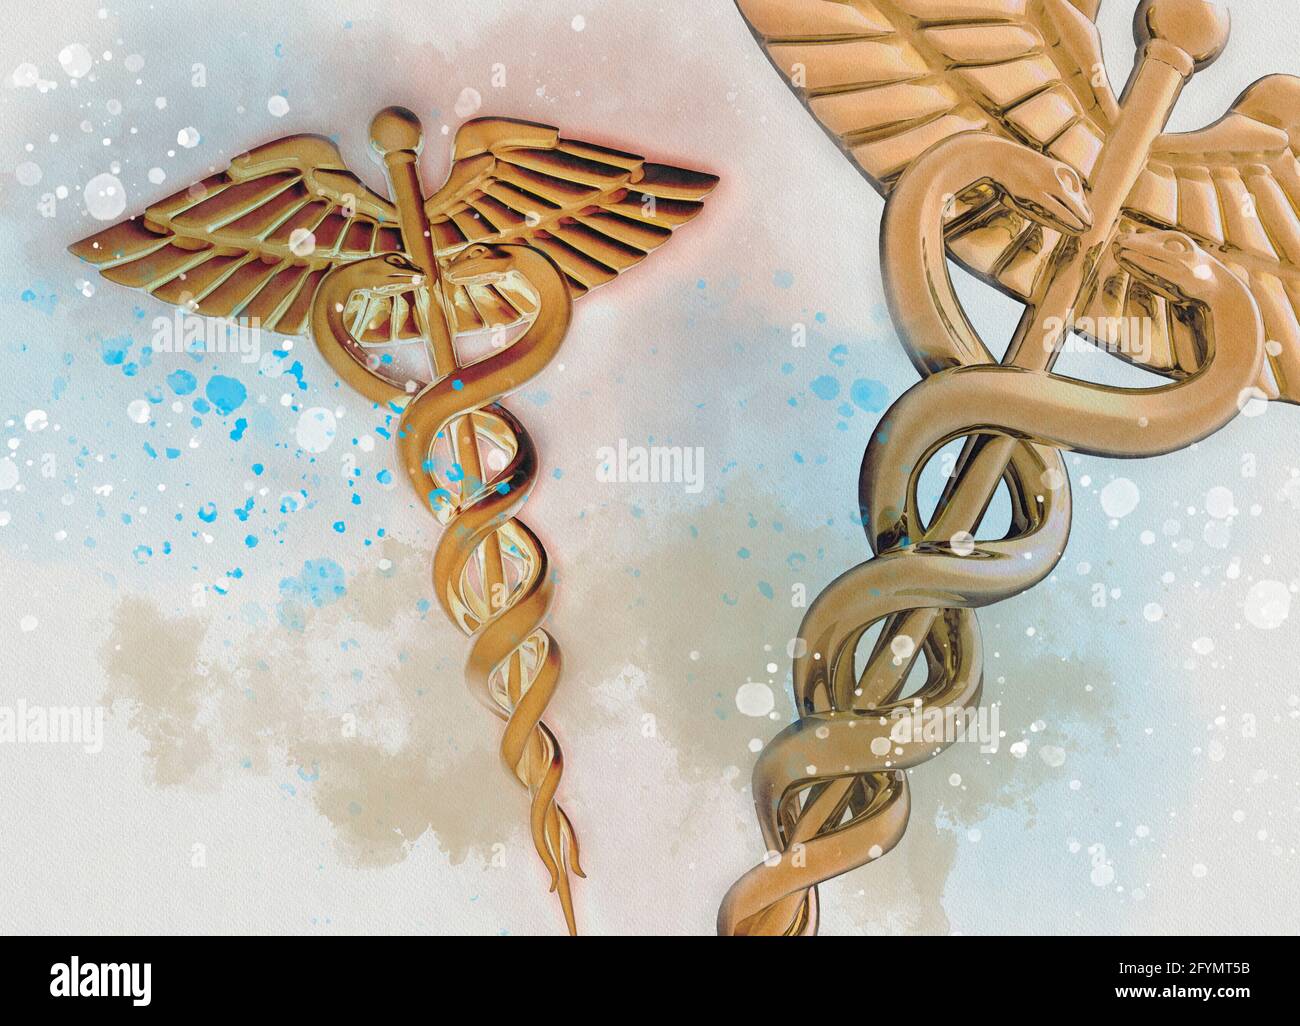 Medical symbols, illustration Stock Photo